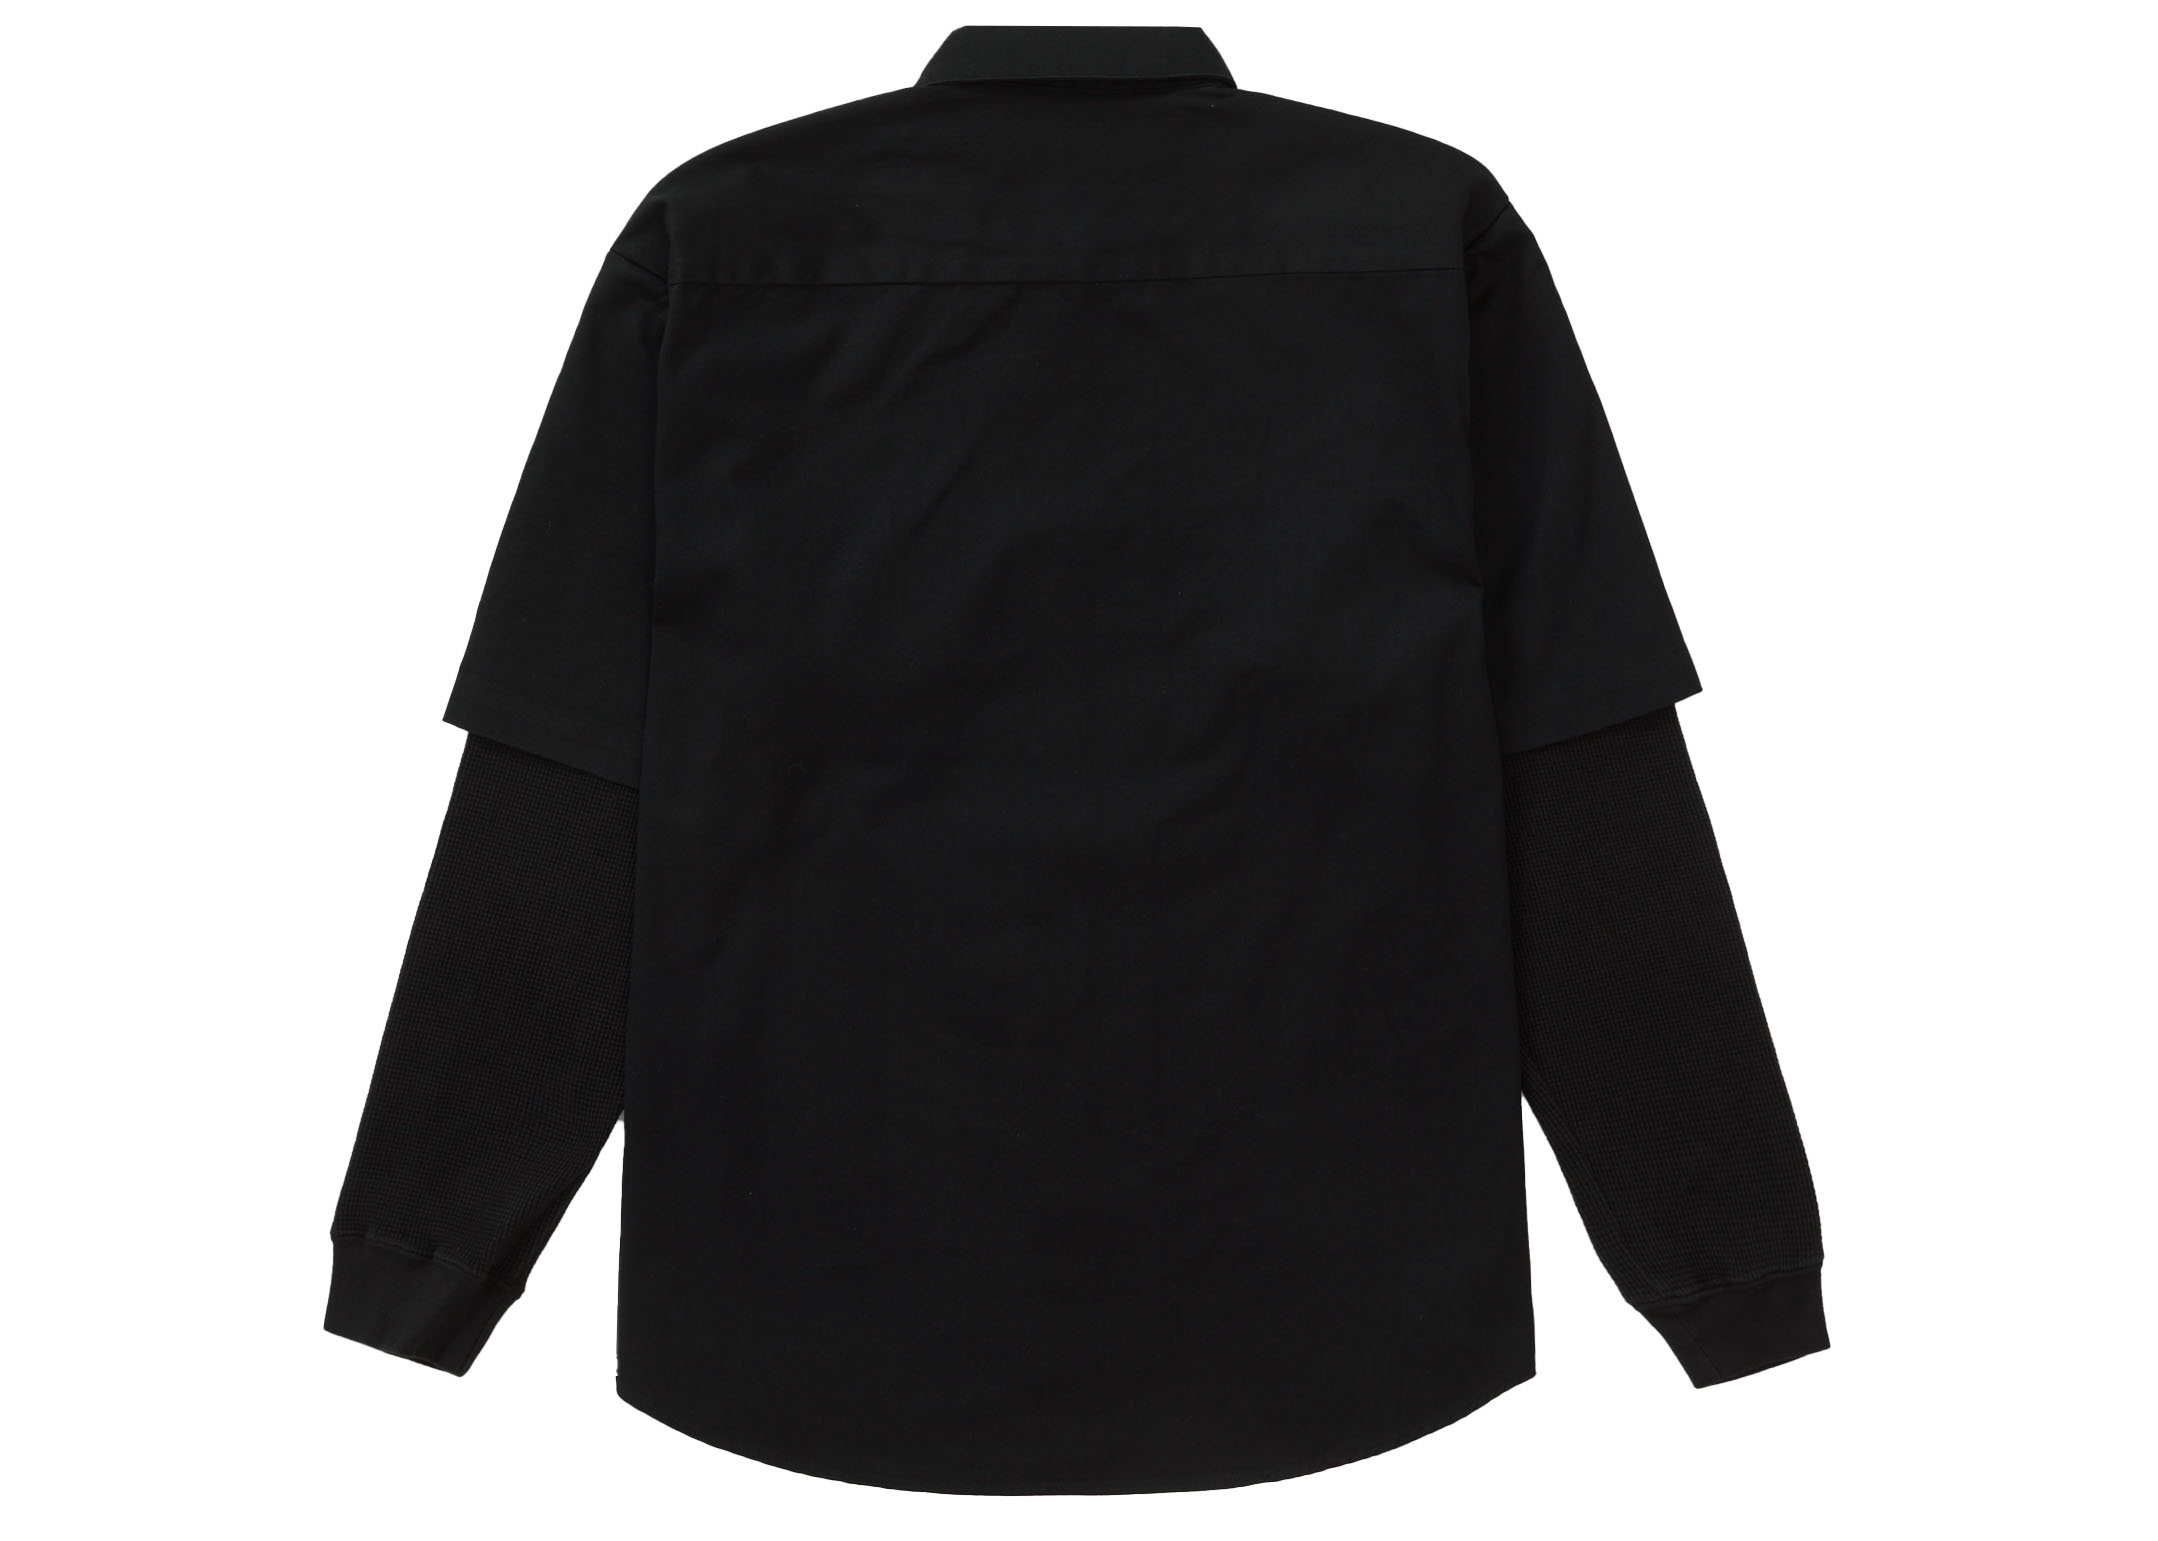 Supreme Thermal Sleeve Work Shirt Black Men's - FW23 - US